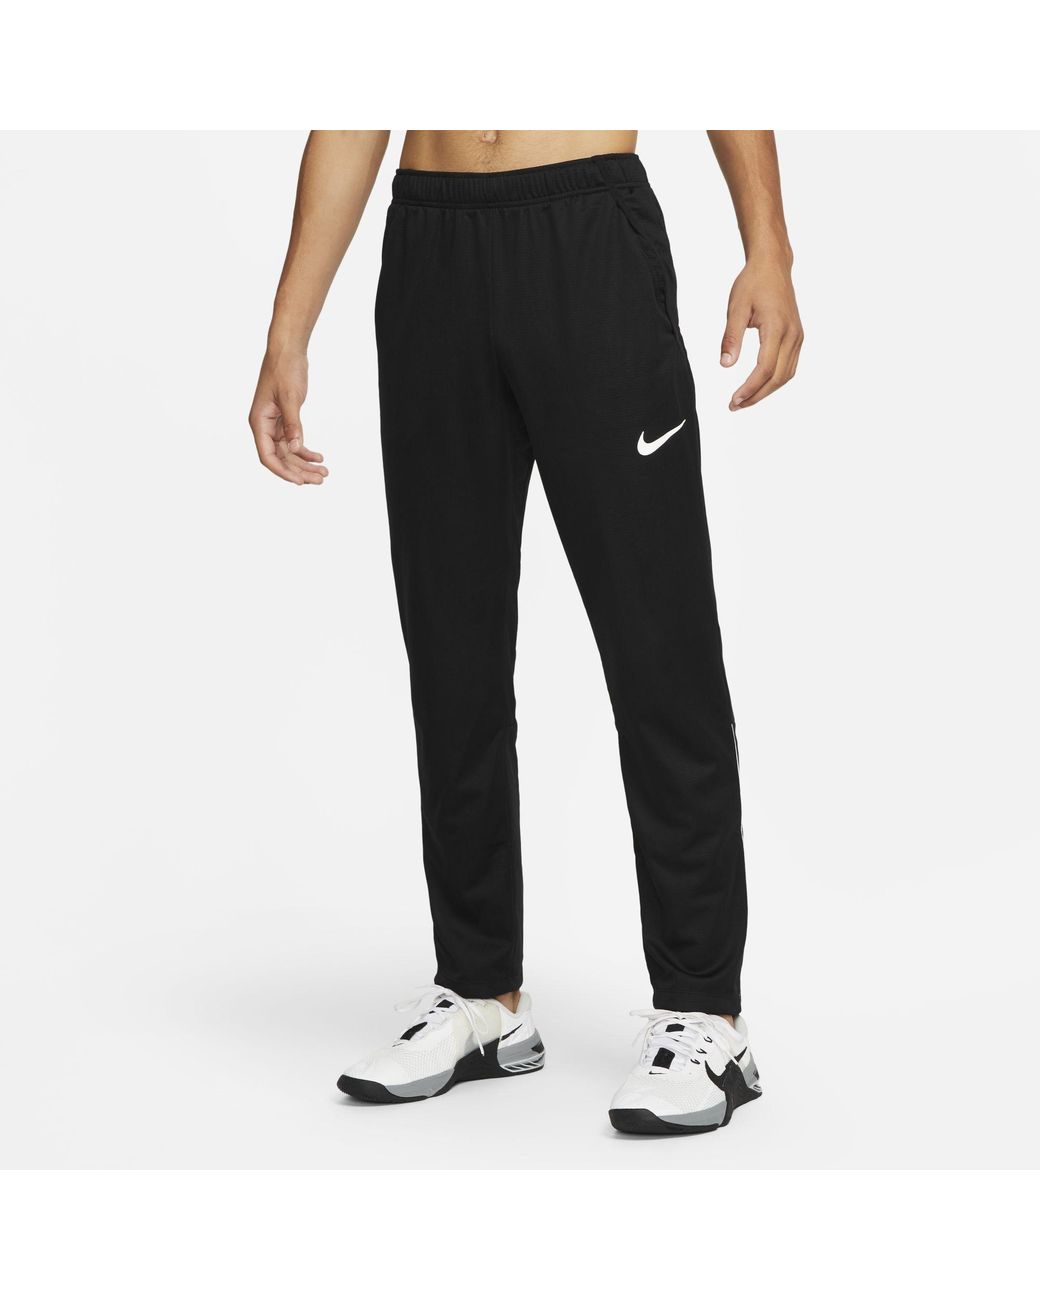 Nike Synthetic Dri-fit Epic Knit Training Pants in Black,White,White ...